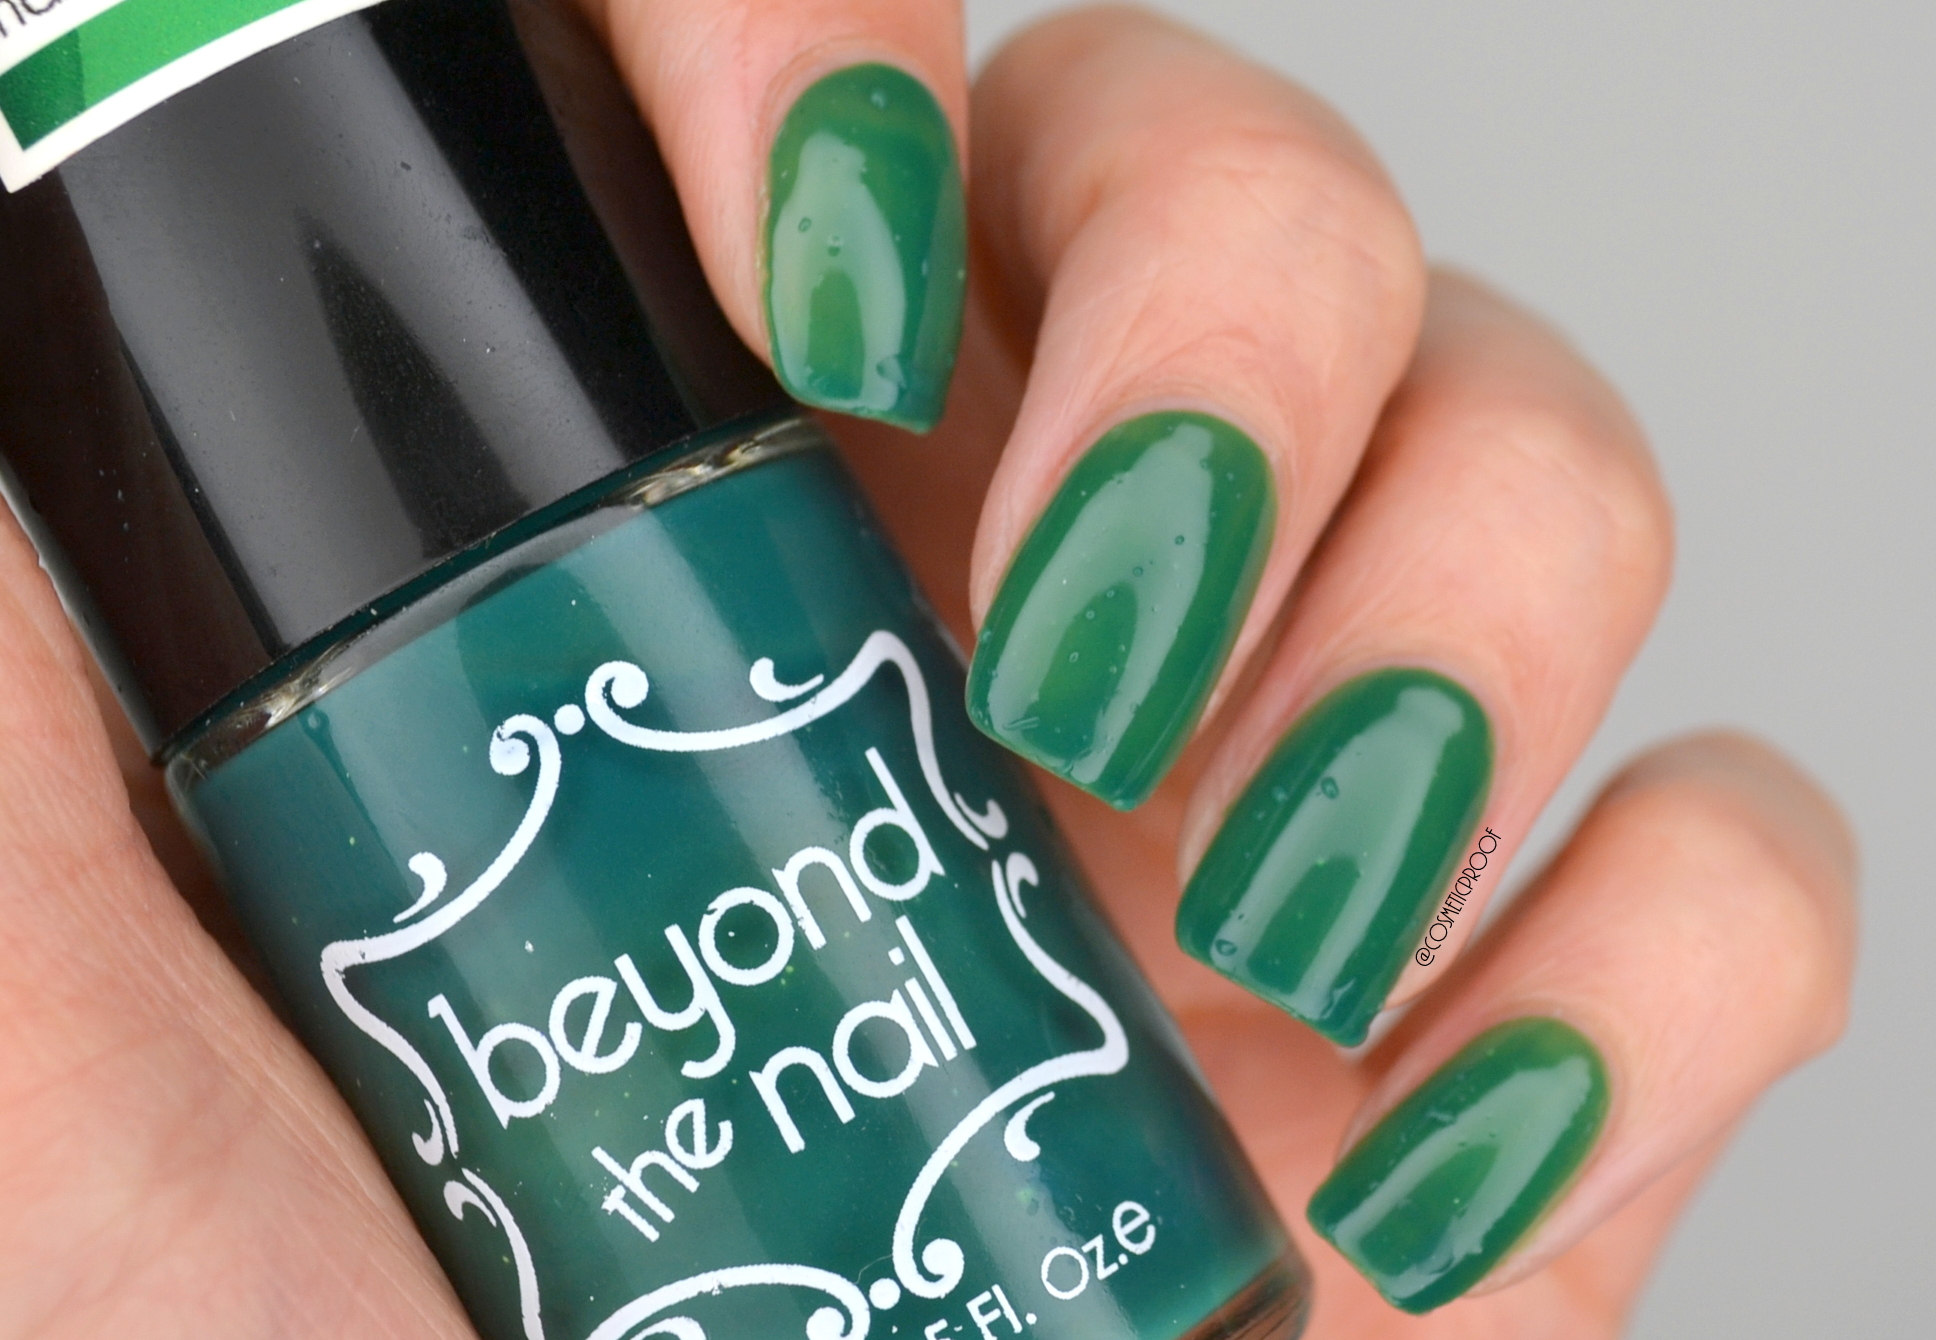 Nail Polish in Green and Brown Shades - wide 5